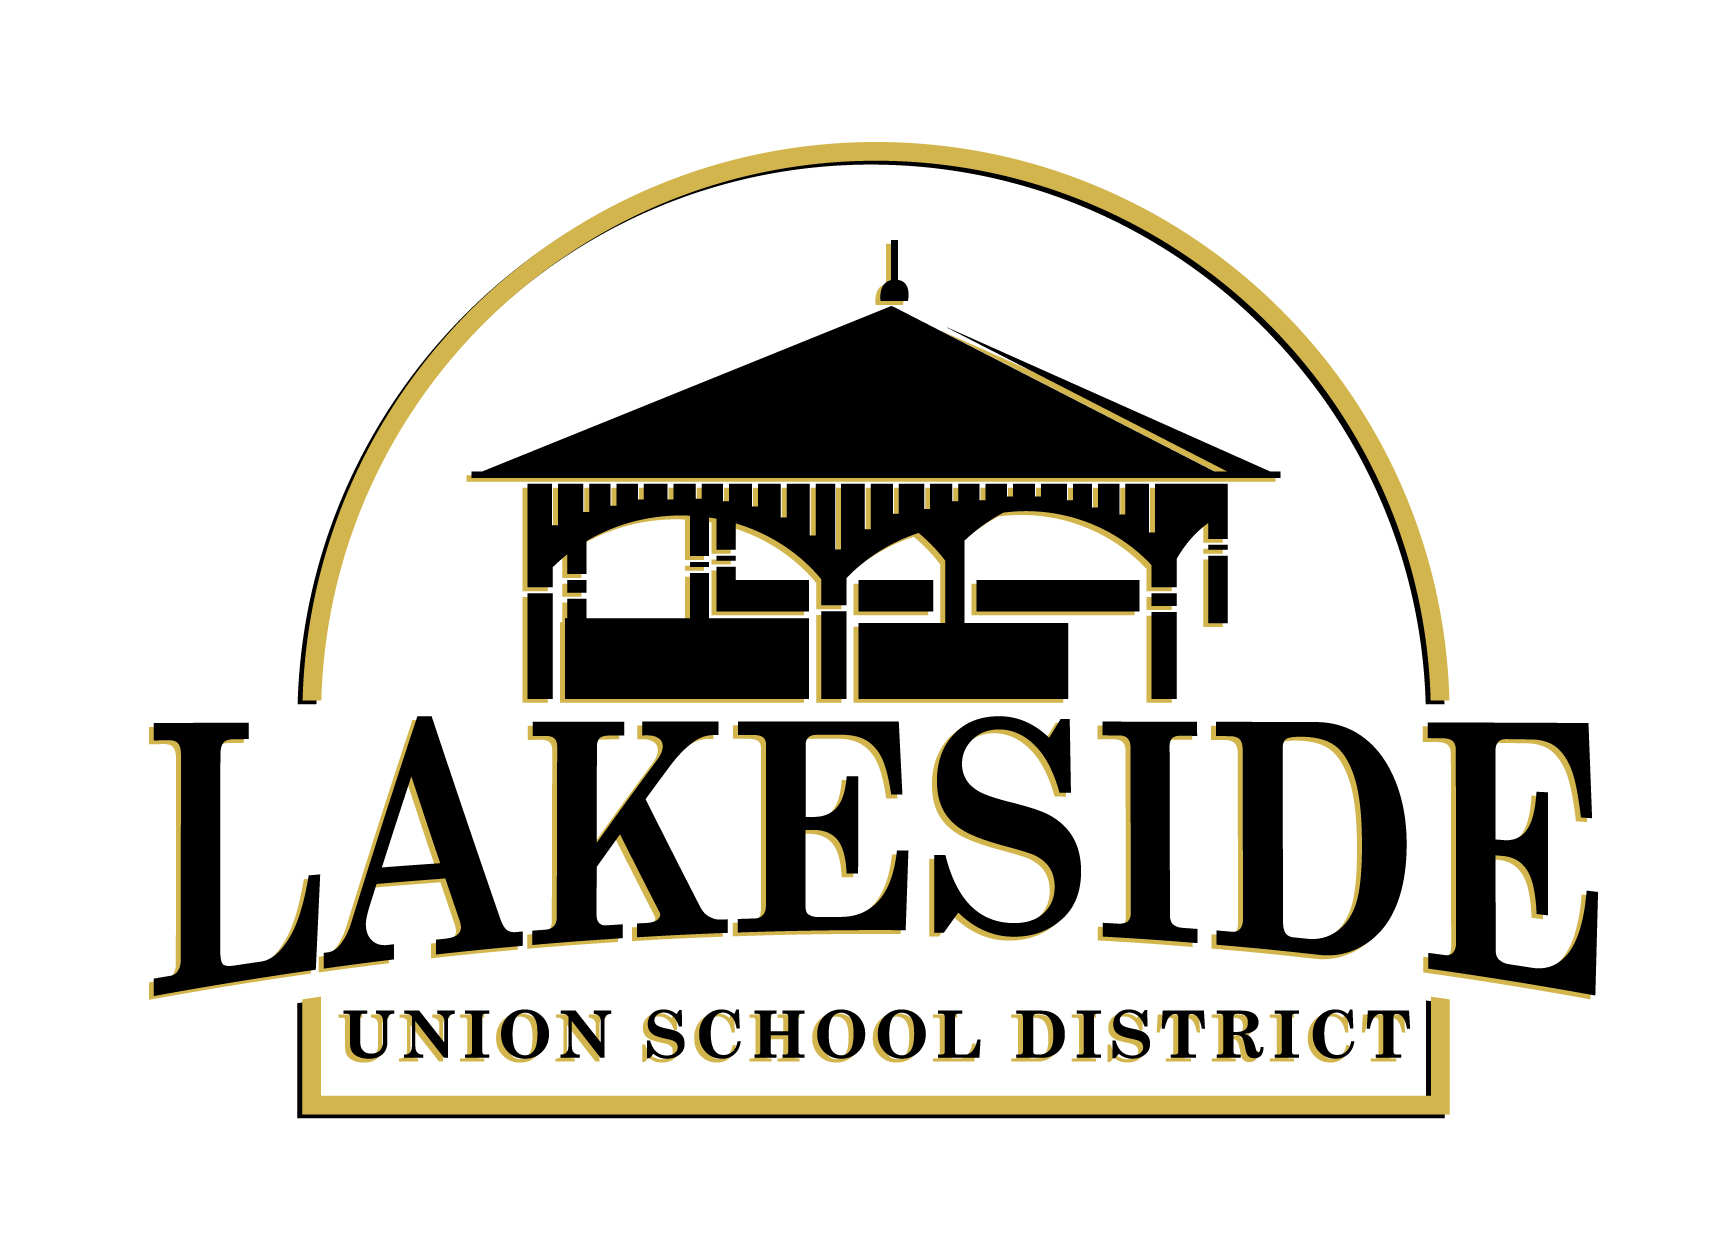 Lakeside Union School District - Lakeside Logo